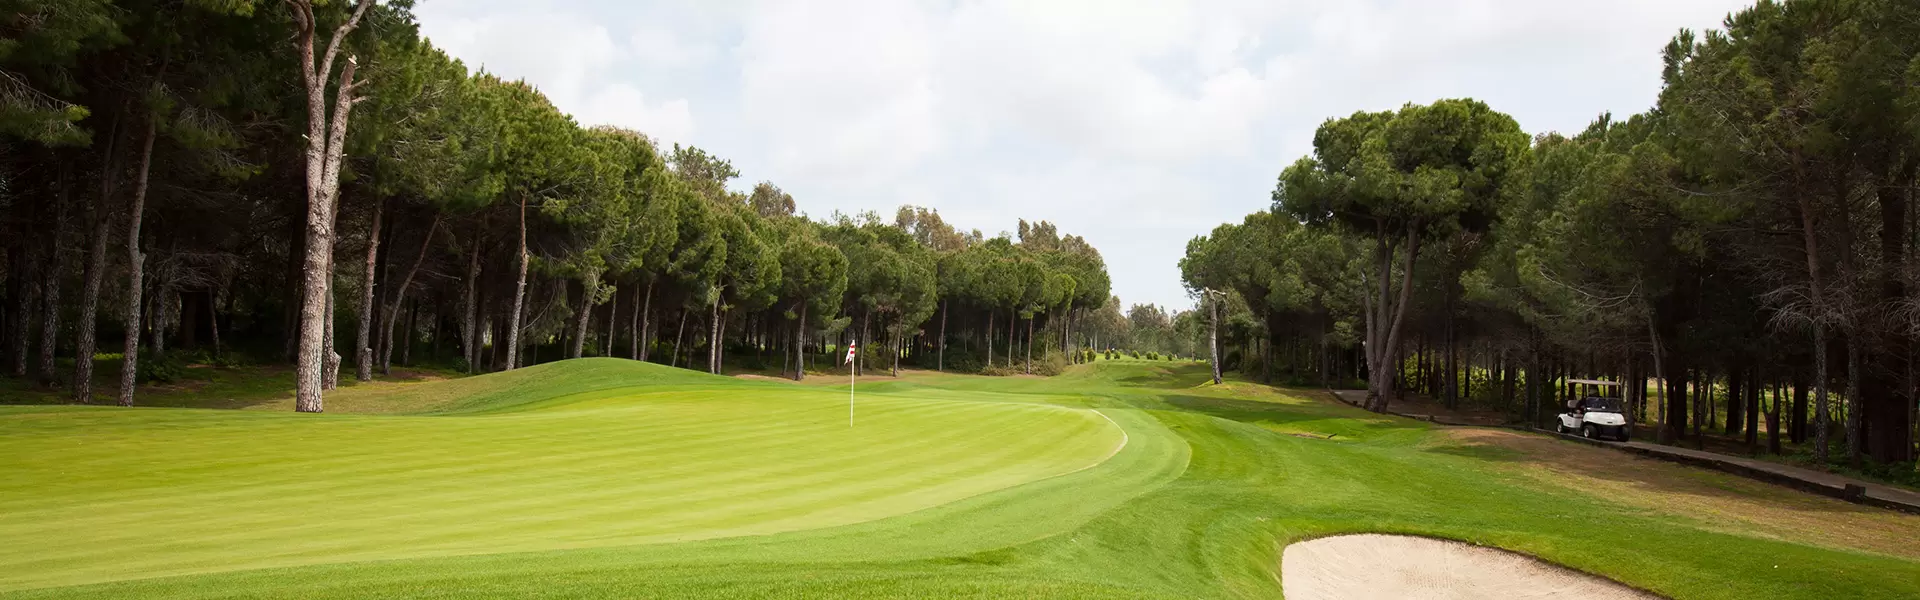 Antalya Golf Club: The Pasha